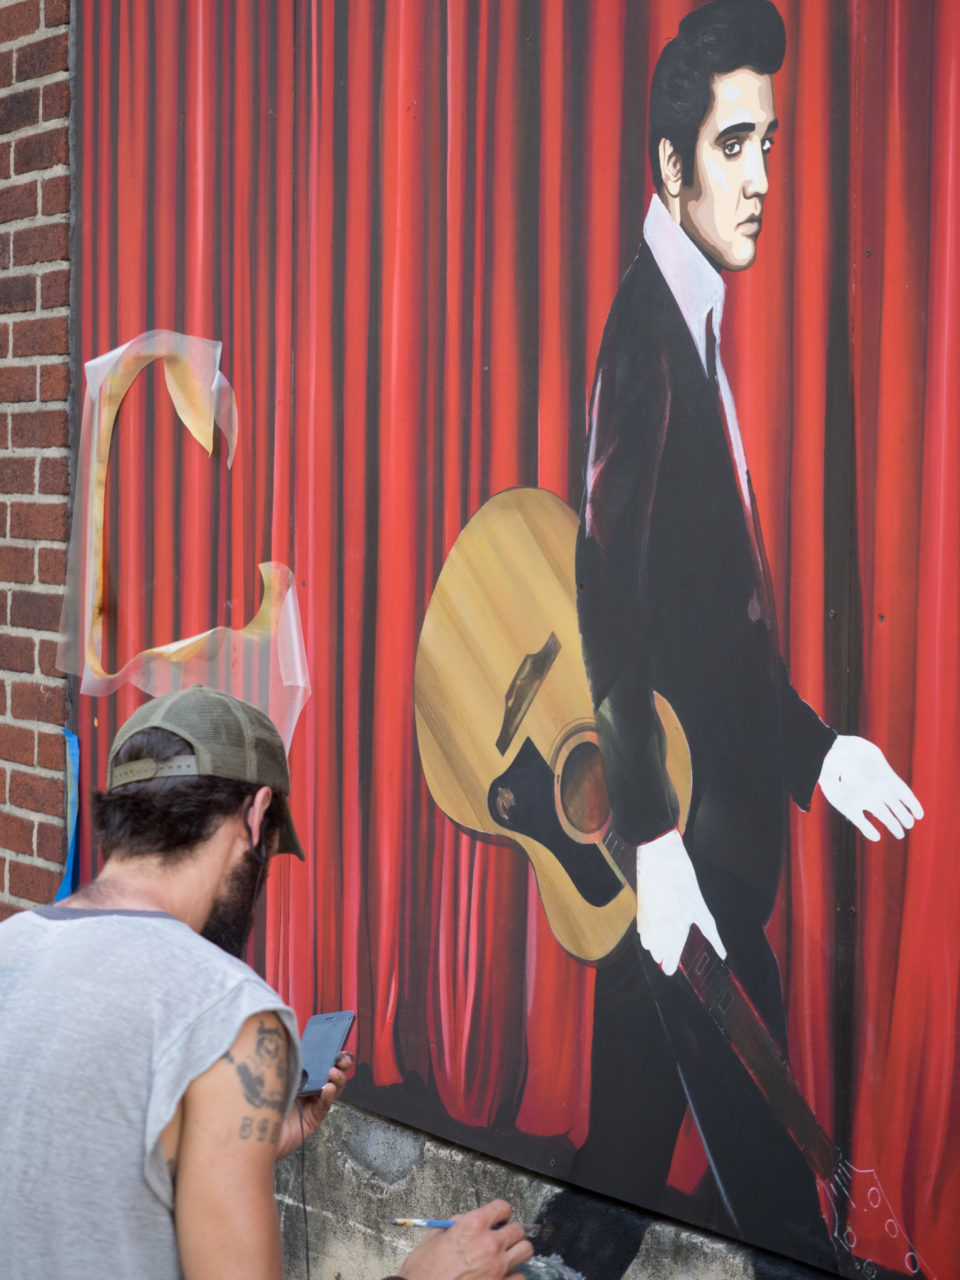 Matt Hooker adds Elvis to the mural created by MooreHooker - 2014